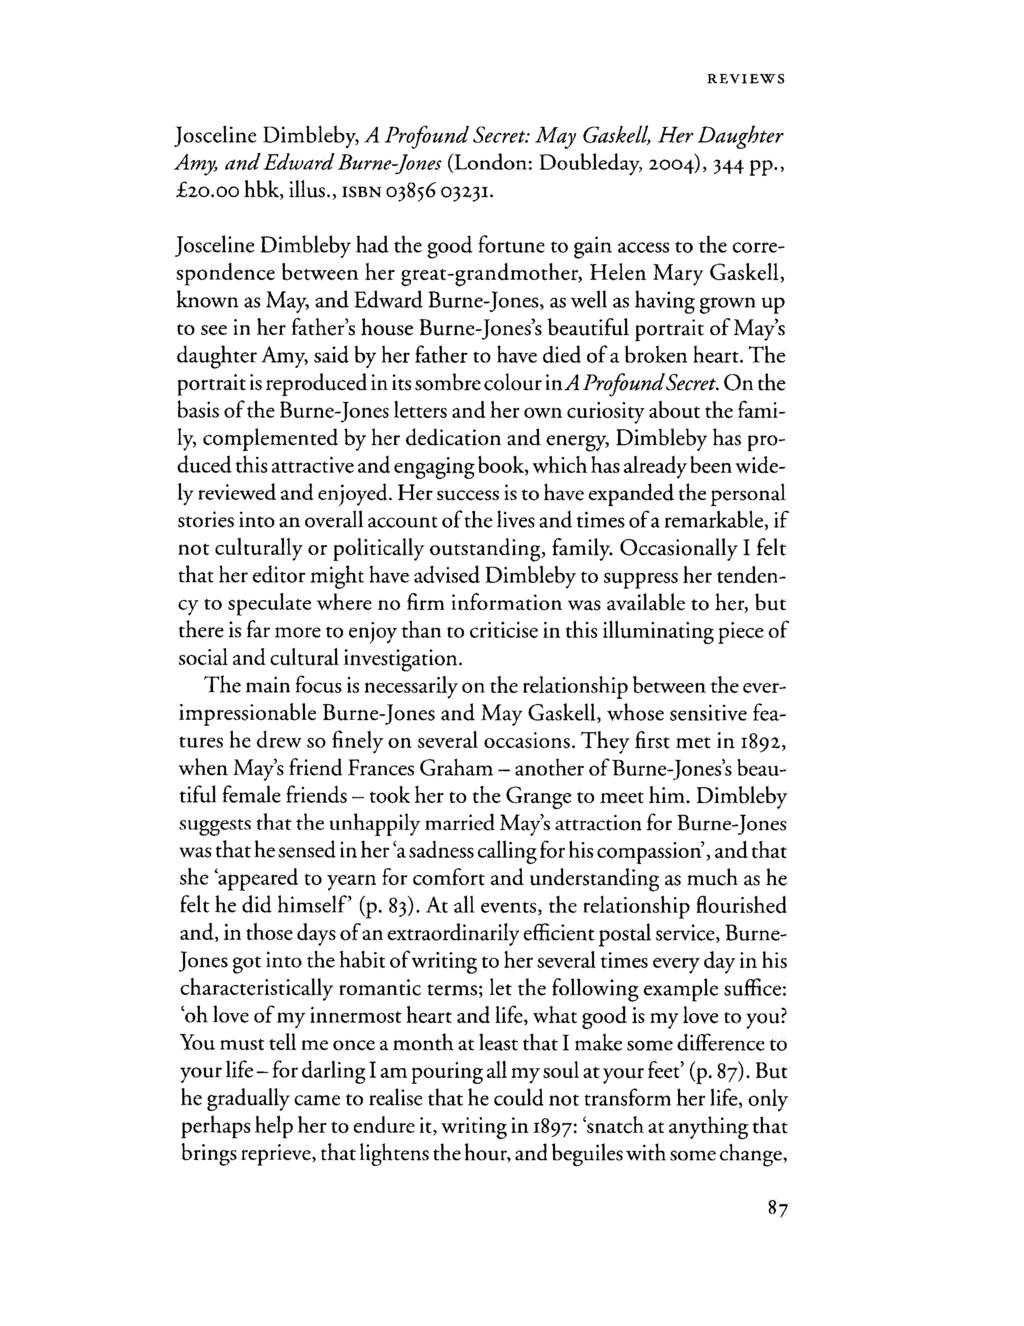 Josceline Dimbleby, A Profound Secret: May Gaskell, Her Daughter Amy, and Edward Burne-jones (London: Doubleday, 2004), 344 pp., 20.00 hbk, illus., ISBN 03856 03231.